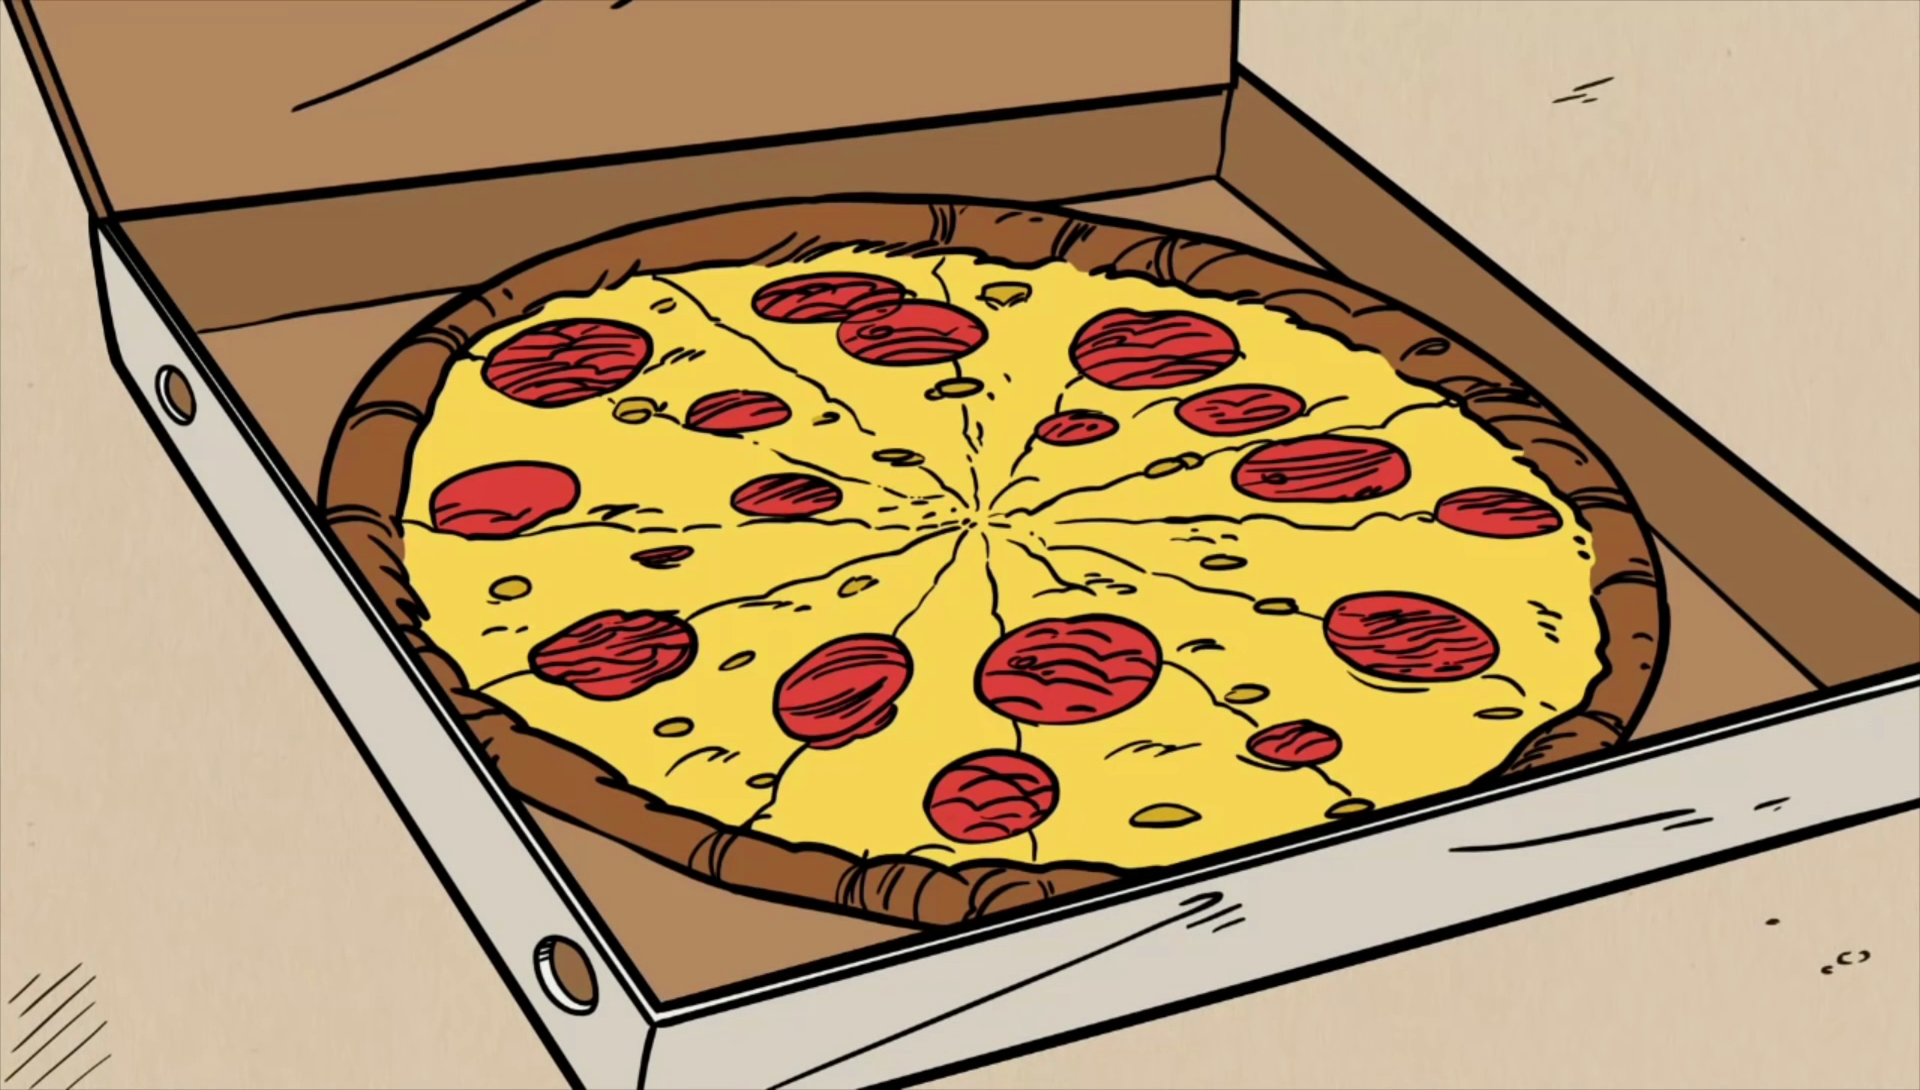 Пицца пружинка слушать. The Loud House пицца. The Loud House пицца persona pizza. Пицца пружинка. А4 Kiss пицца.